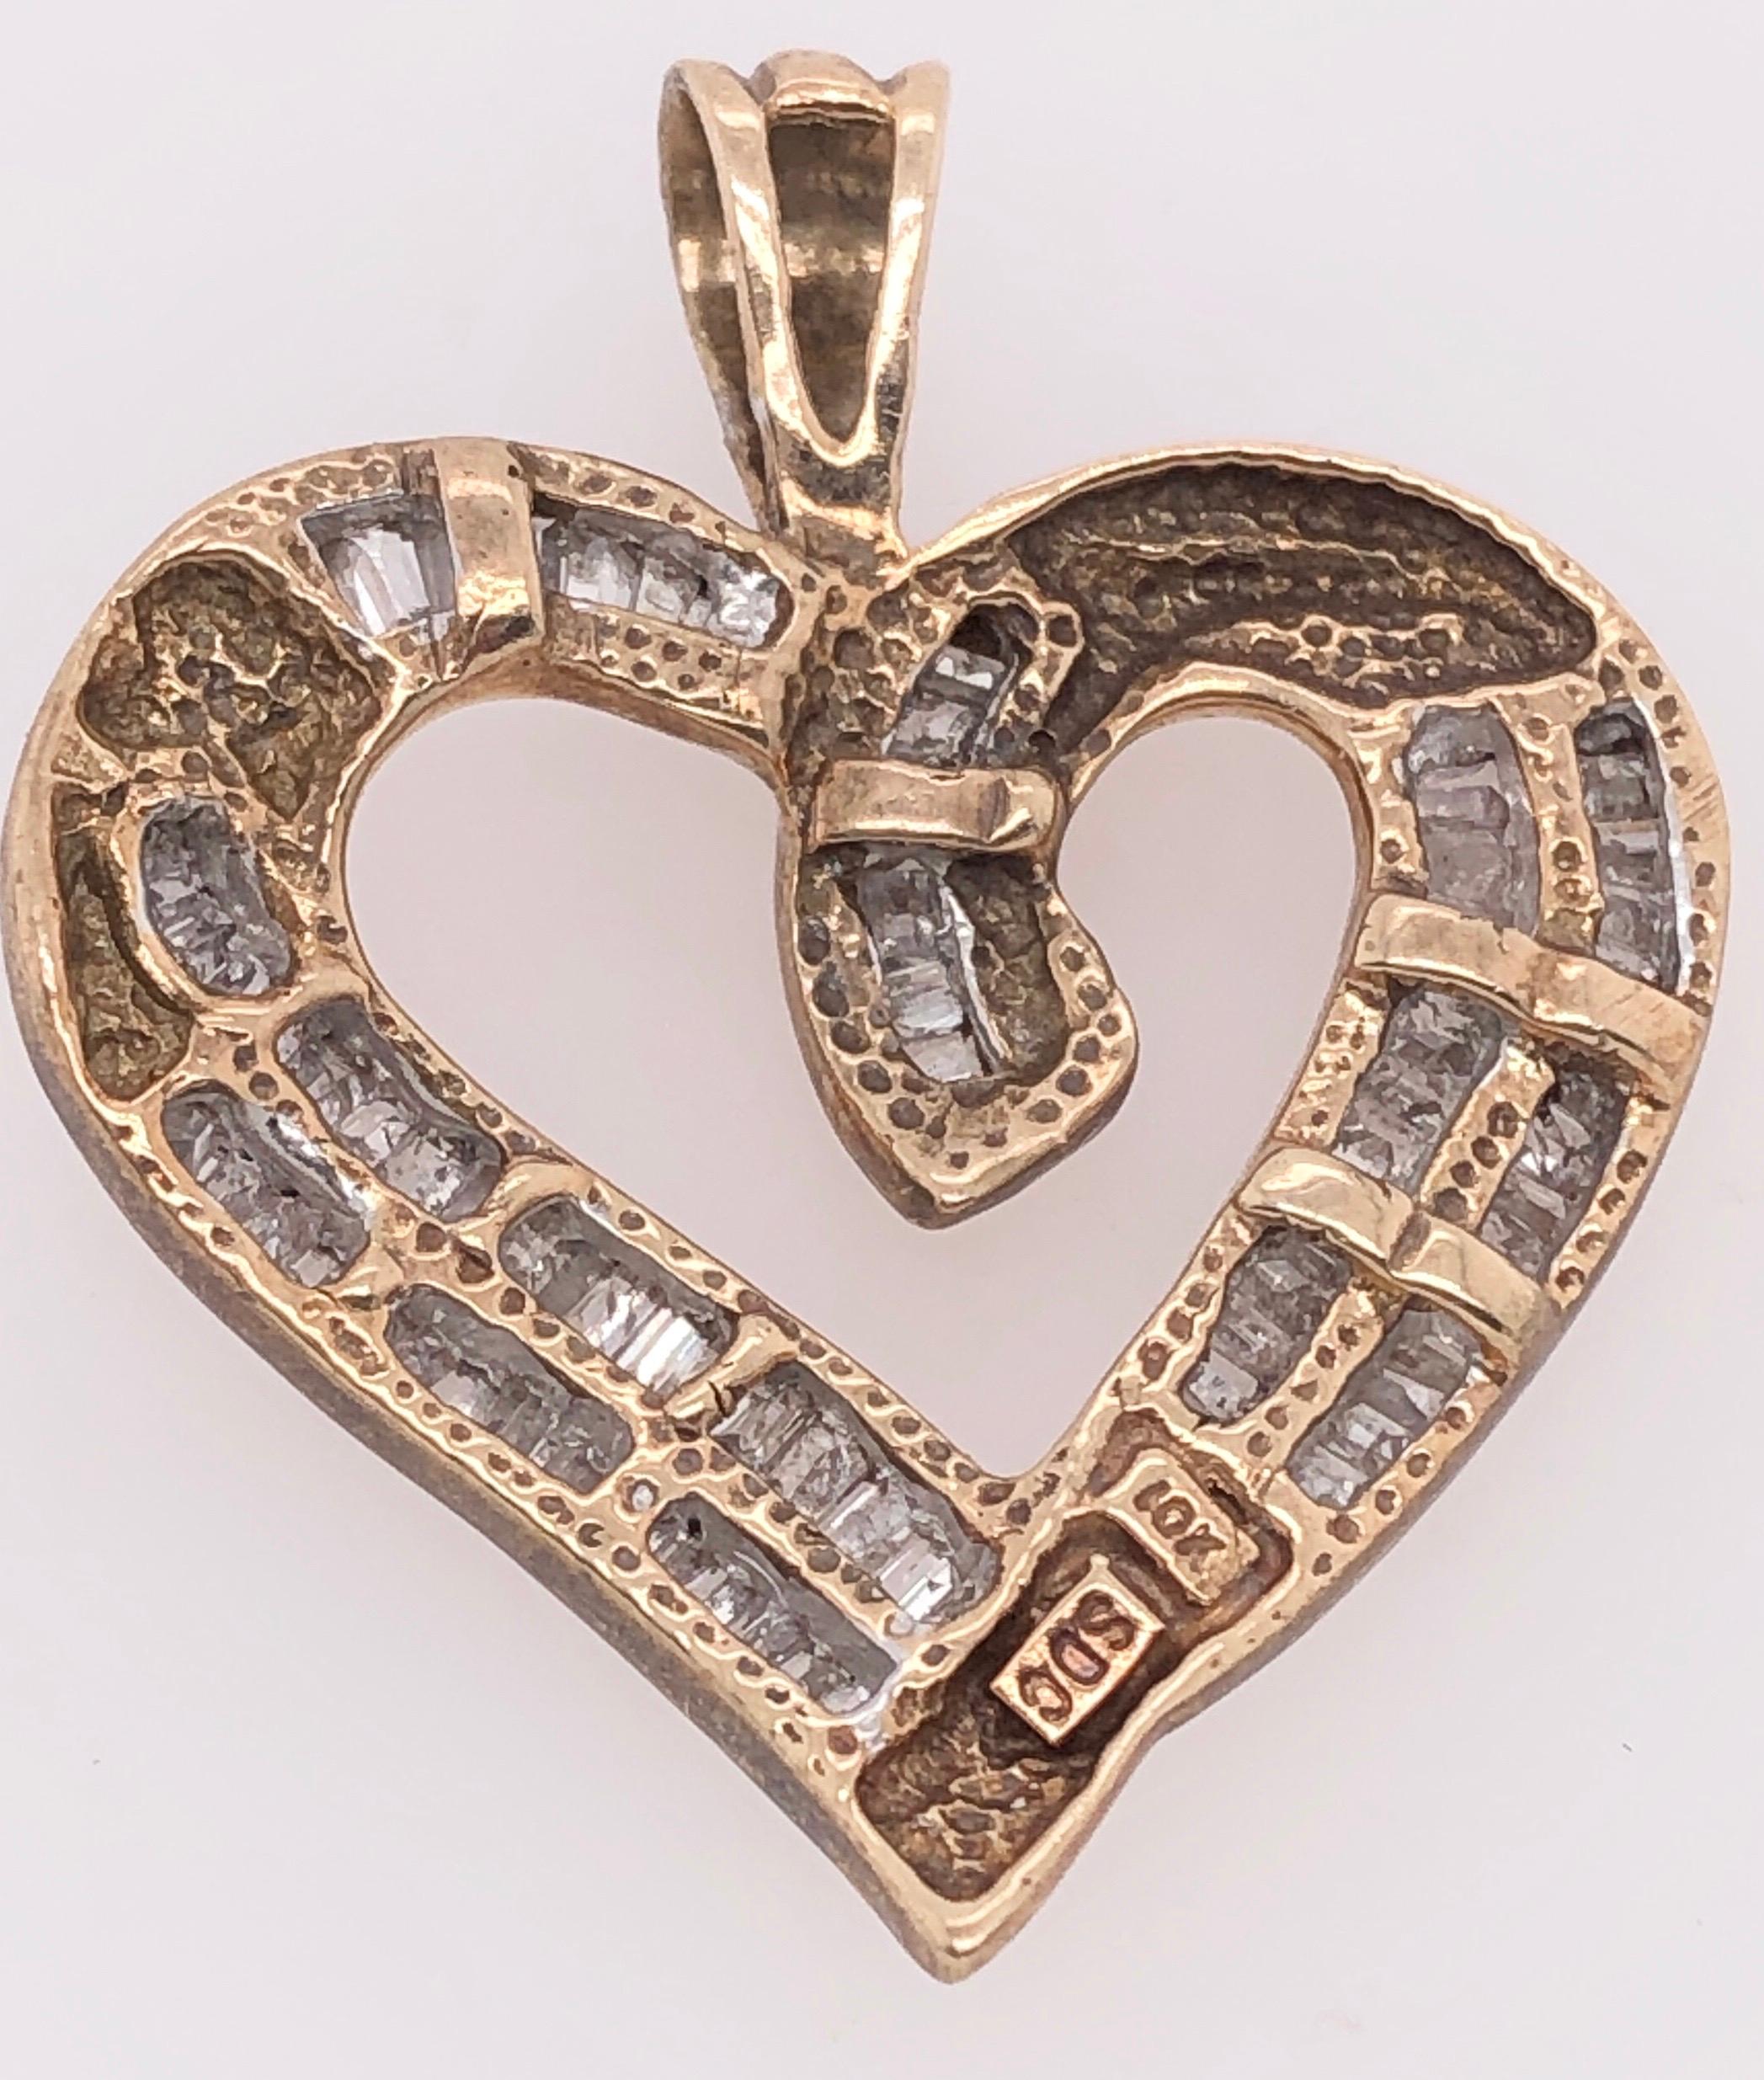 10 karat gold heart necklace